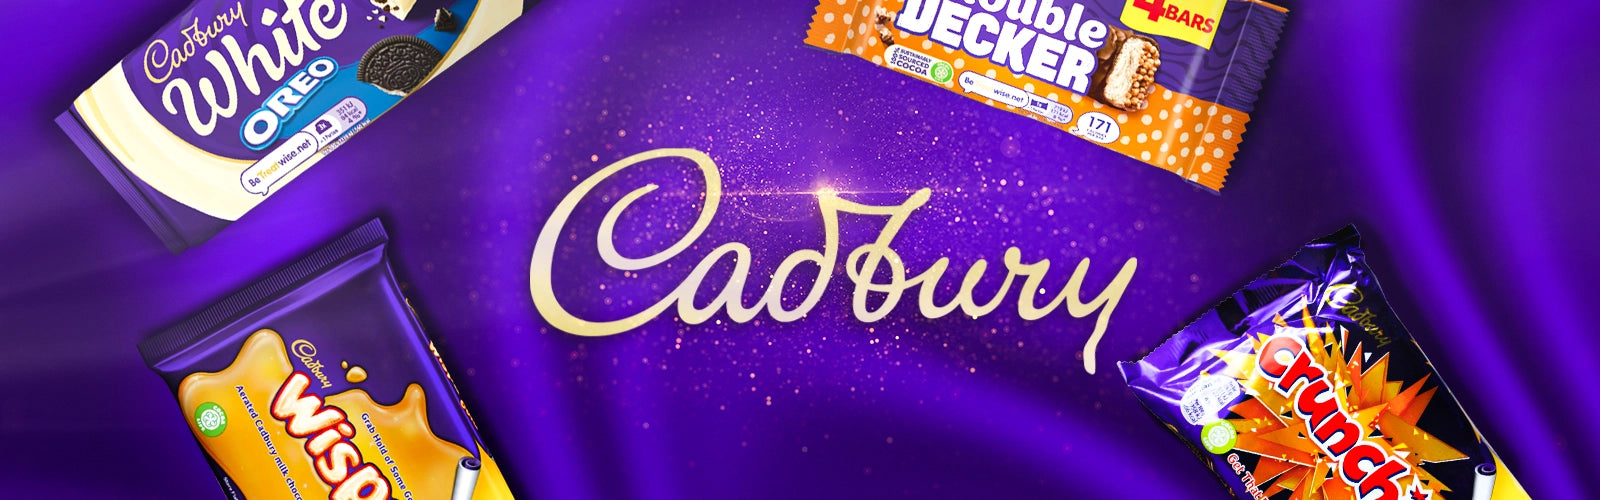 Cadbury collection banner